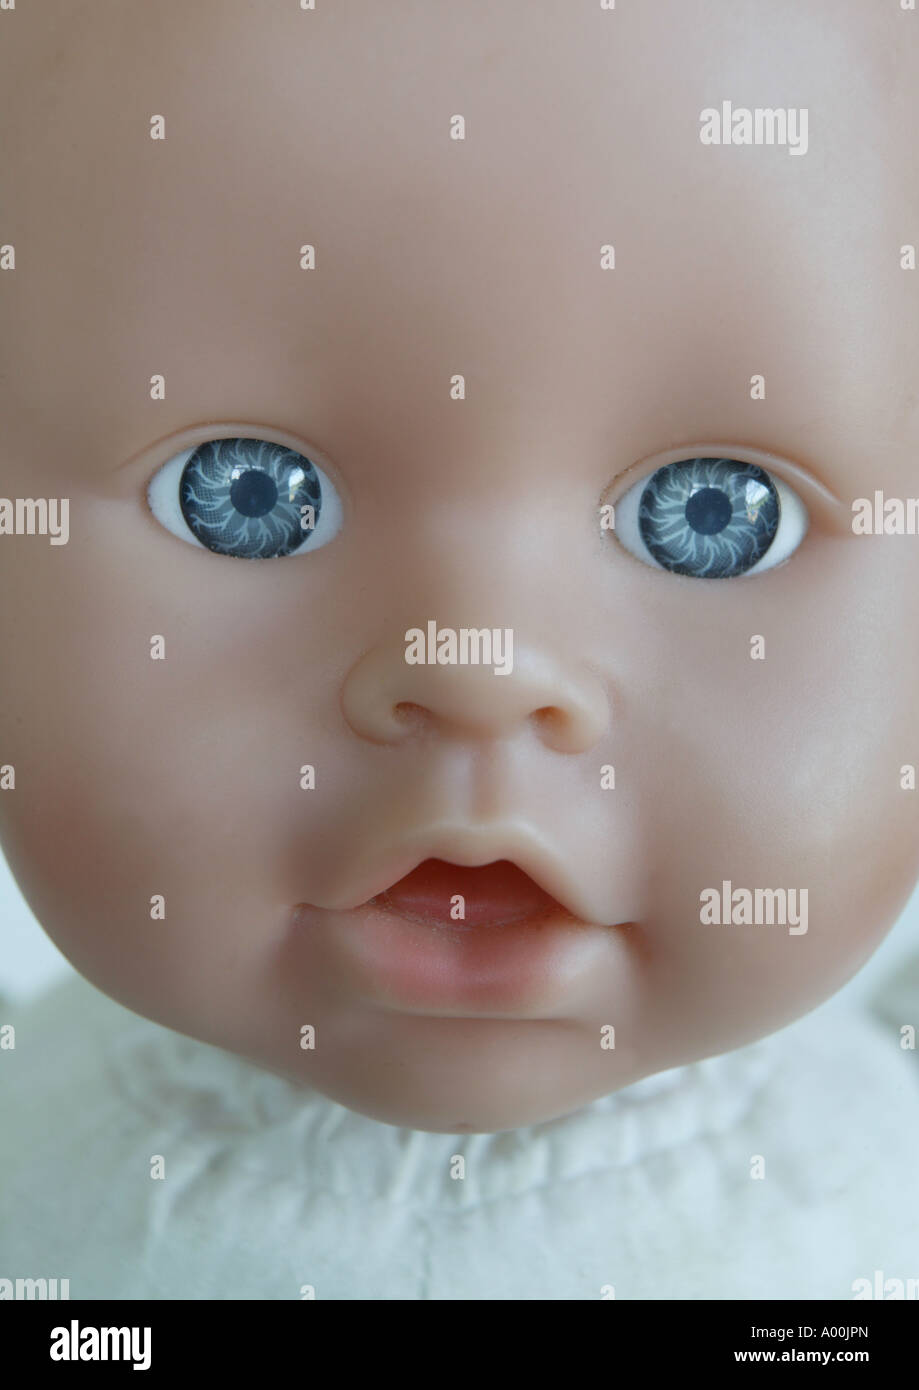 Detalle de muñecas cara con grandes ojos azules Fotografía de stock - Alamy